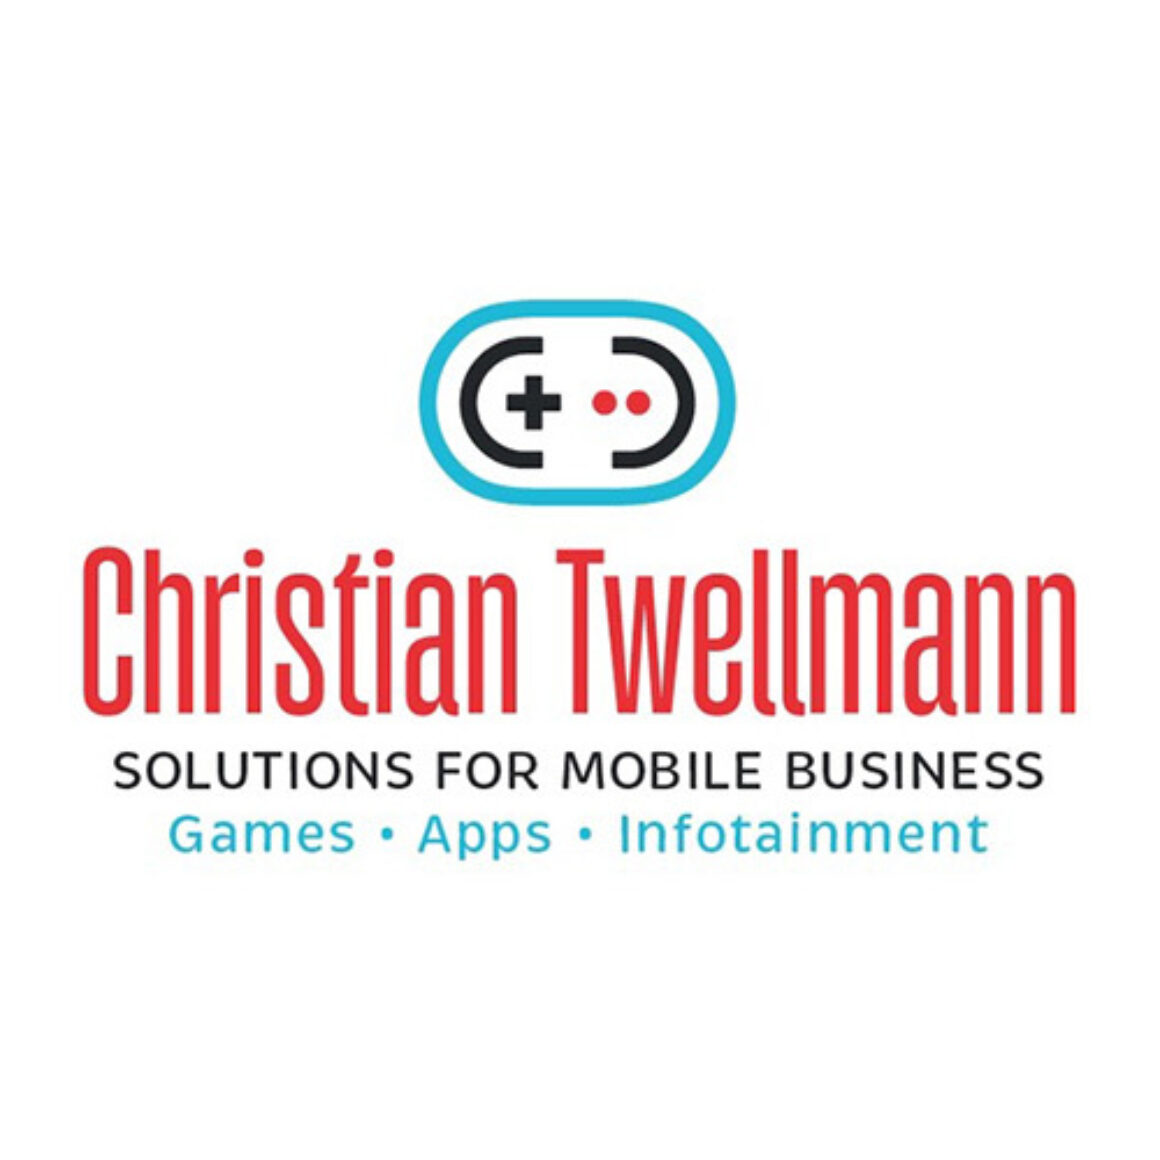 Christian Twellmann